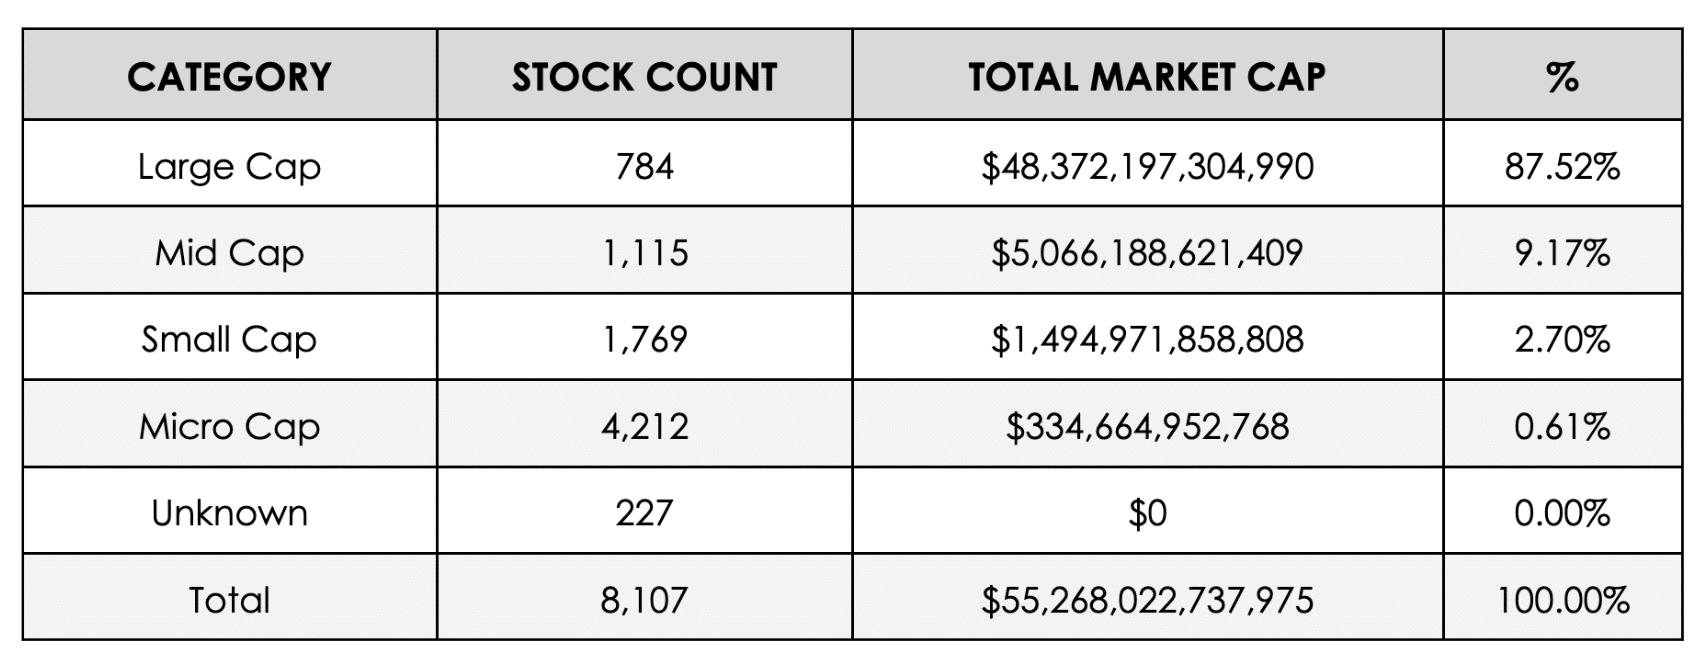 Summary of Stocks in the US Market 